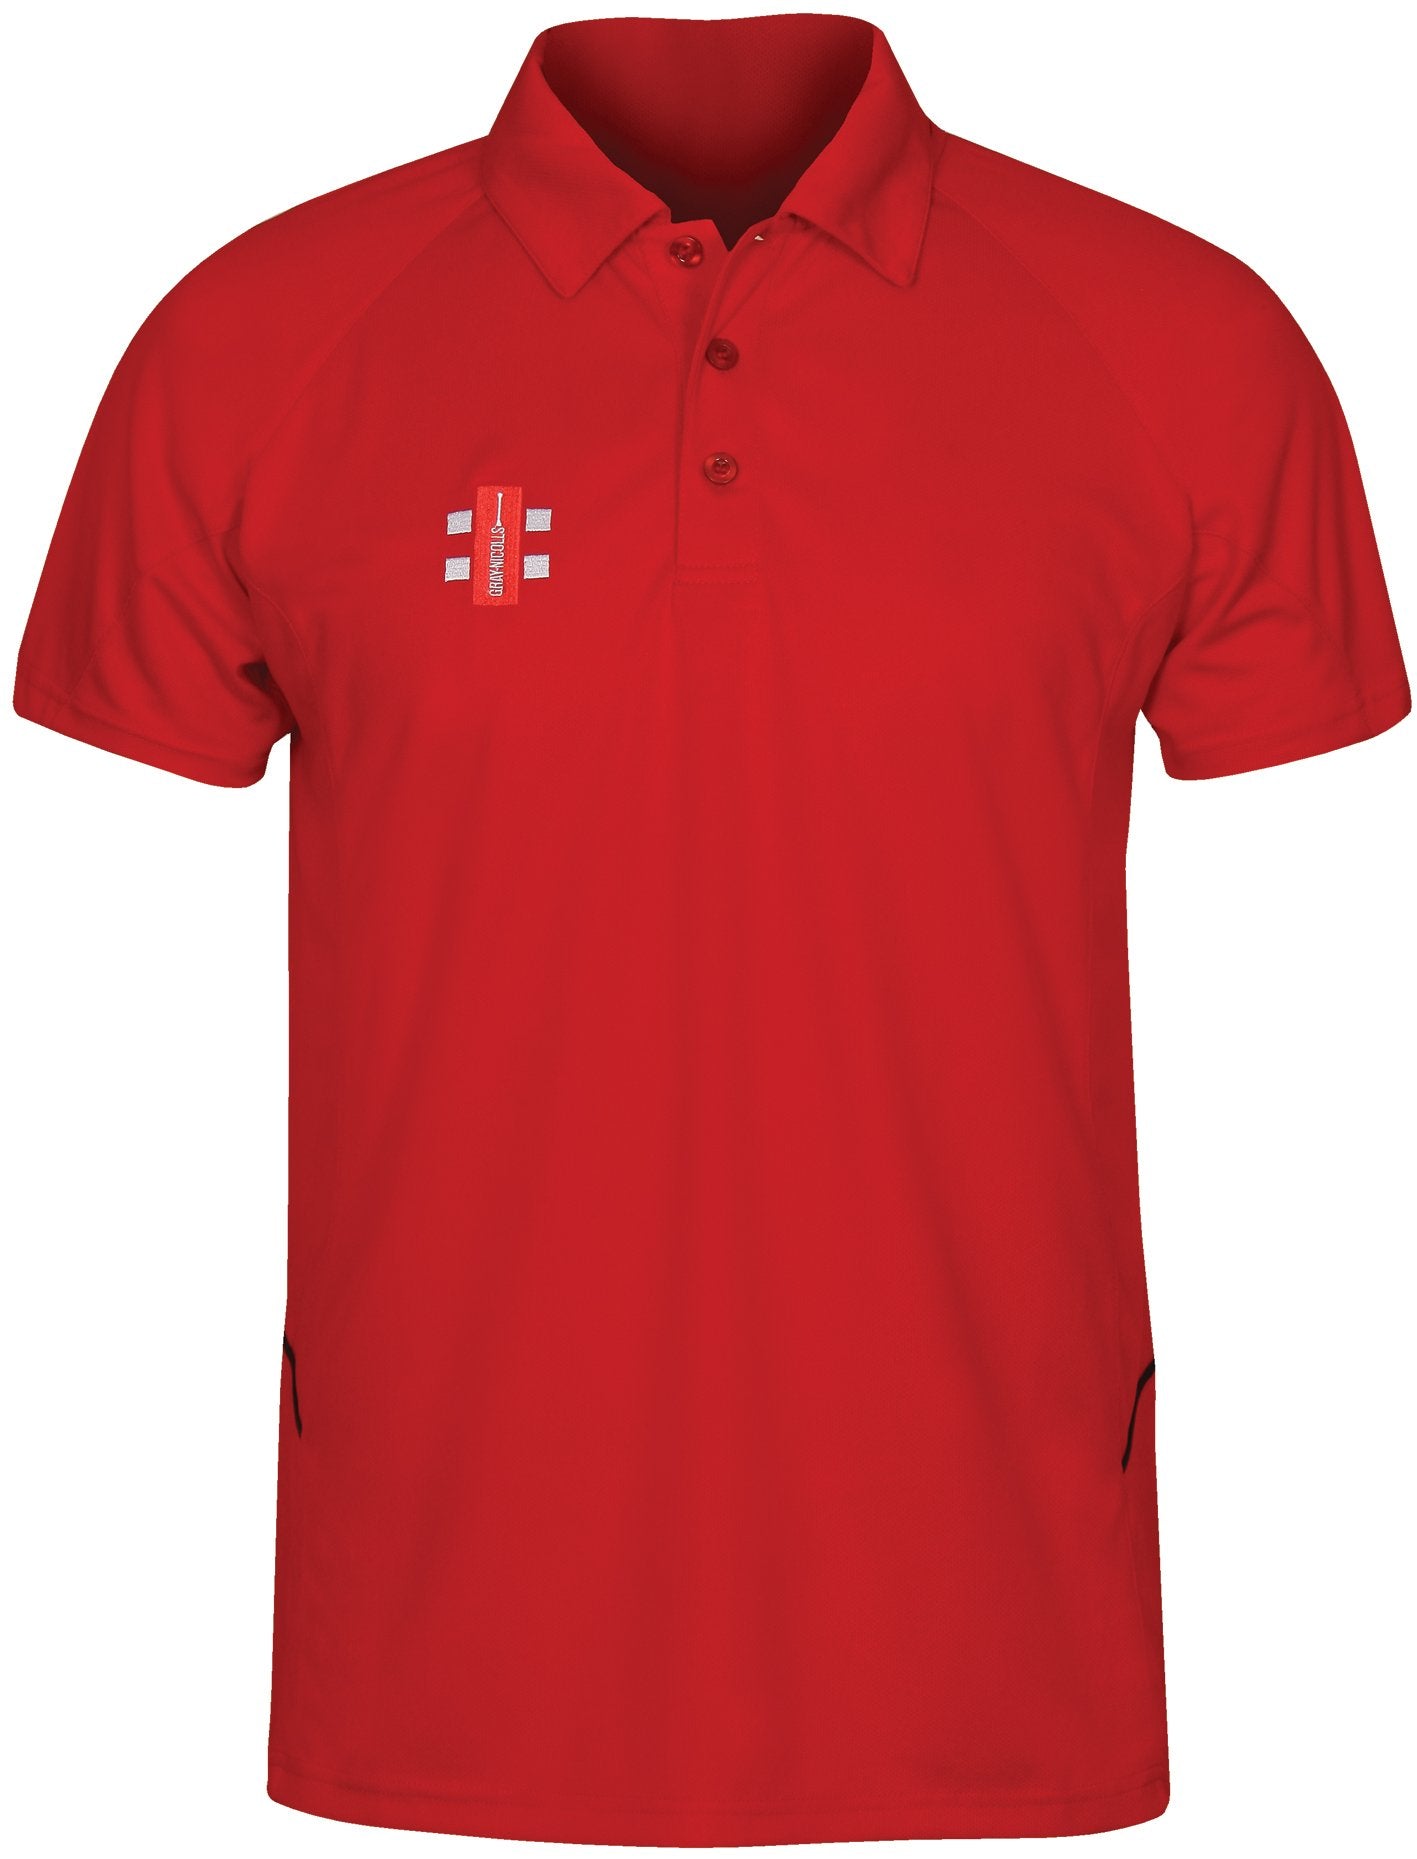 CCFC14LeisureShirts Matrix Polo Shirt Red